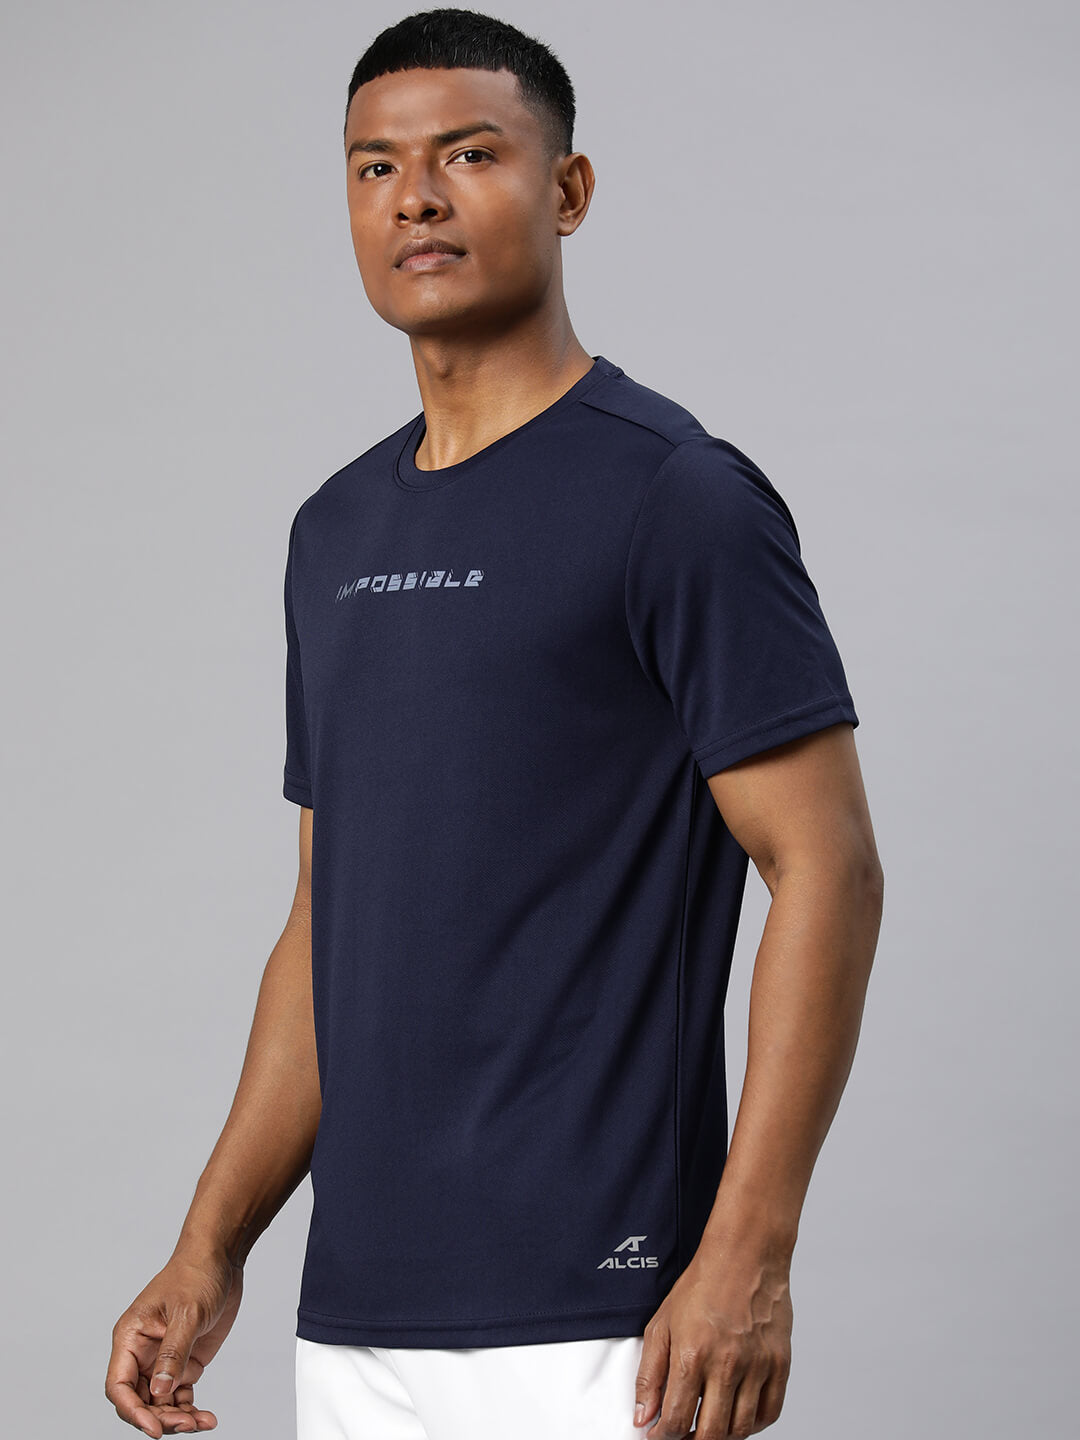 Alcis Men Typography Printed Dry Tech Slim Fit Sports T-shirt